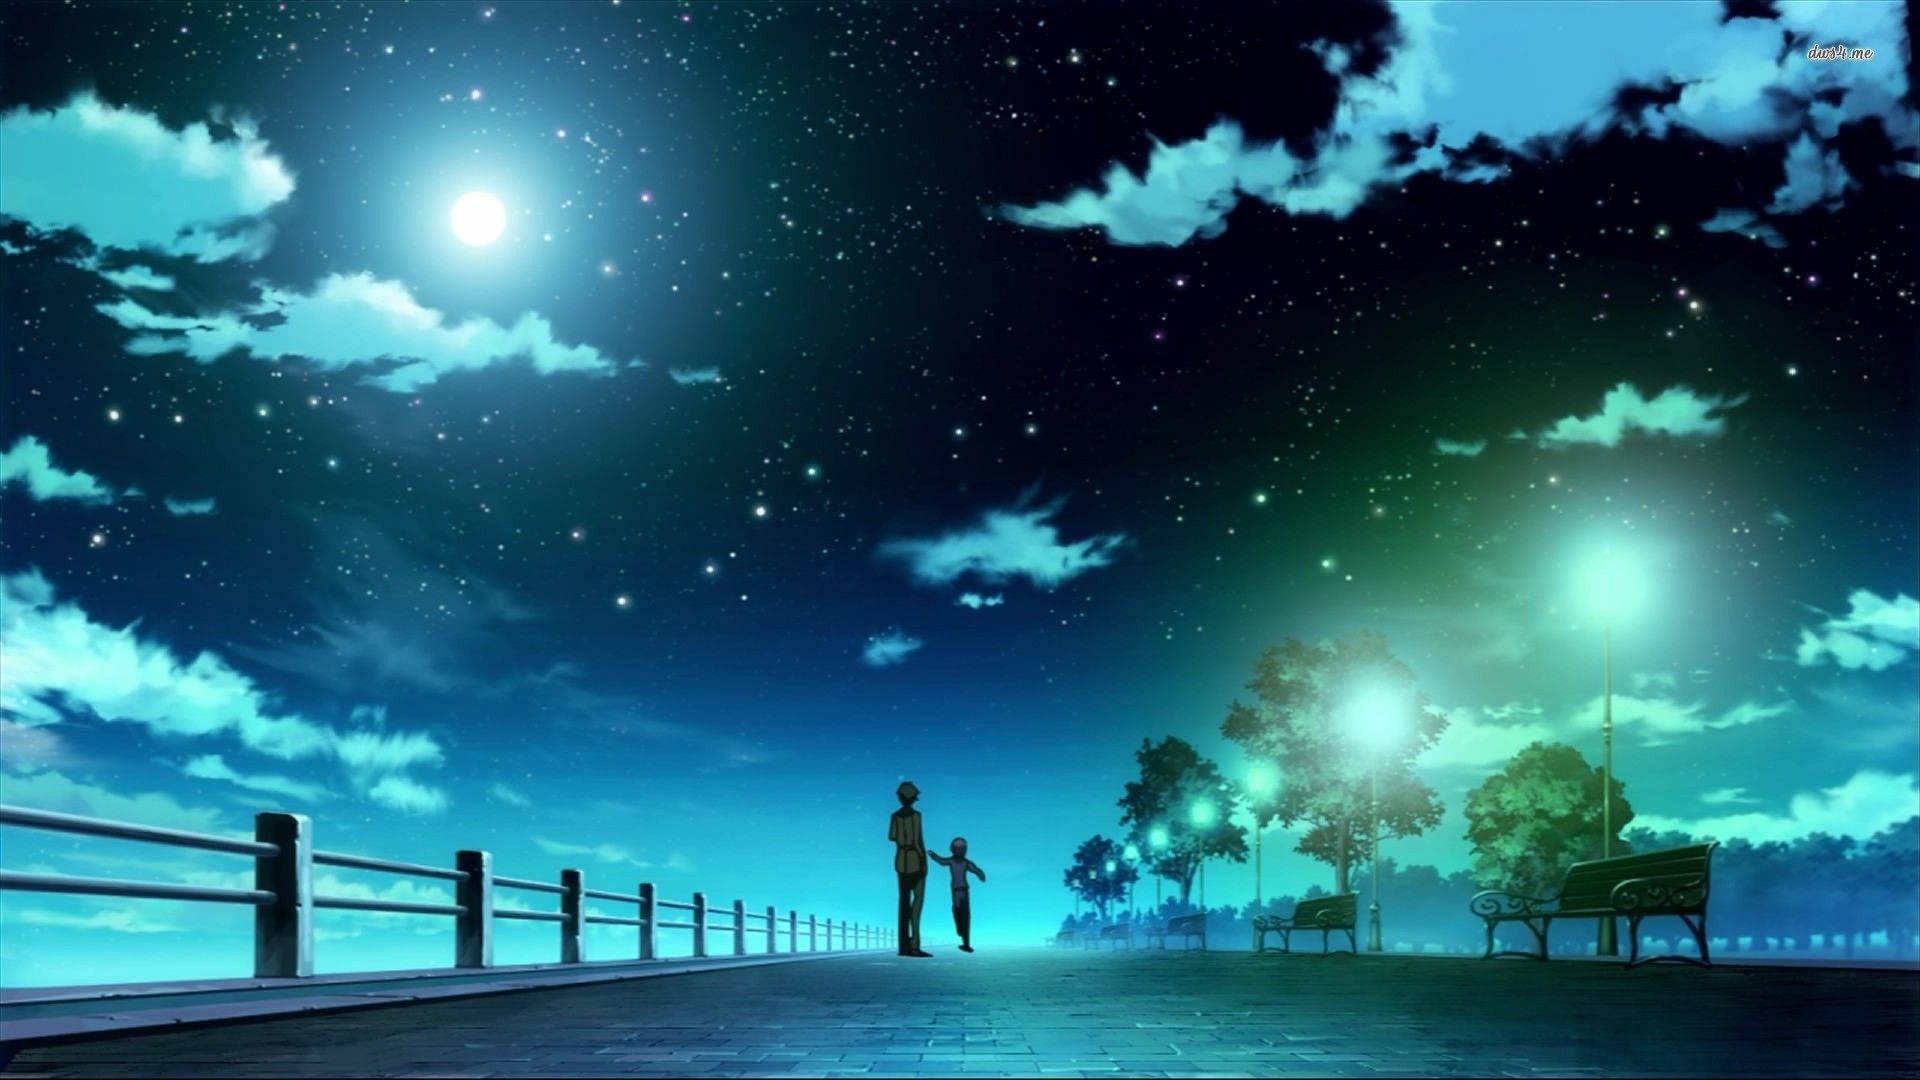 Free download Anime Starry Night Sky Wallpaper Landscape Background Image 179 [1920x1080] for your Desktop, Mobile & Tablet. Explore Starry Sky Wallpaper. Starry Night Desktop Wallpaper, Night Sky Desktop